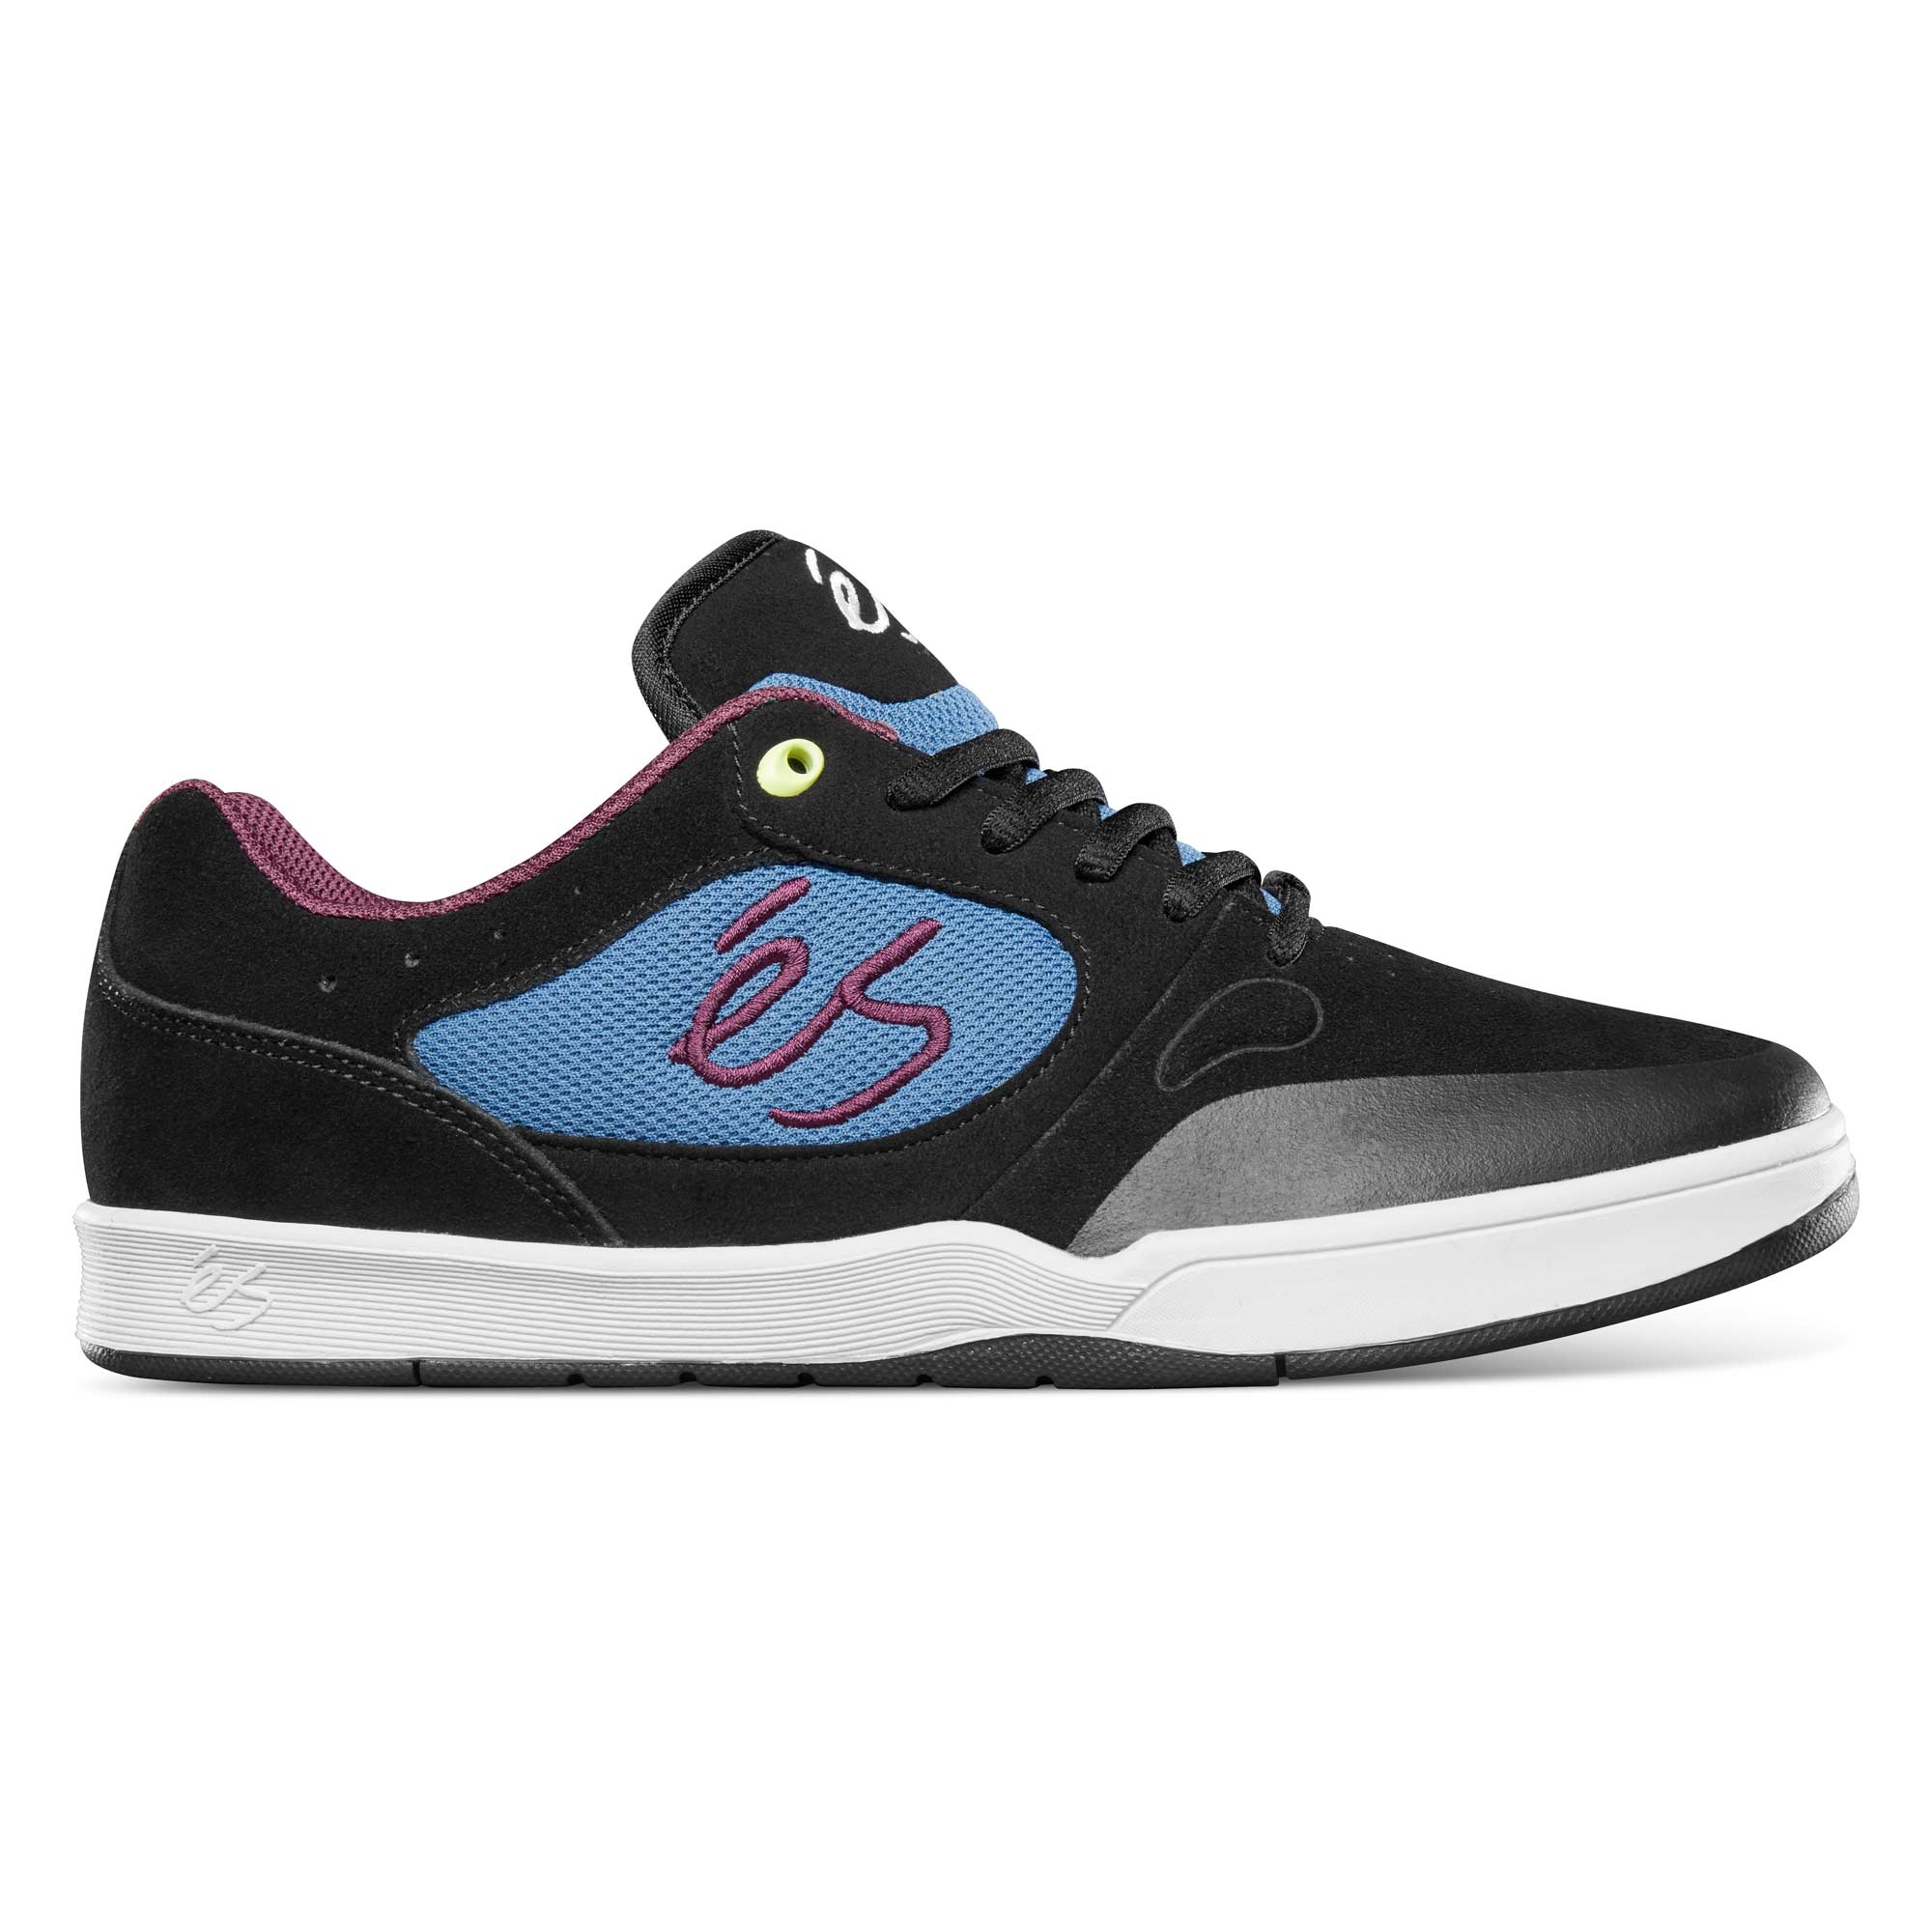 eS SKB Shoe SWIFT 1.5 bla/blu/pur, black/blue/purple